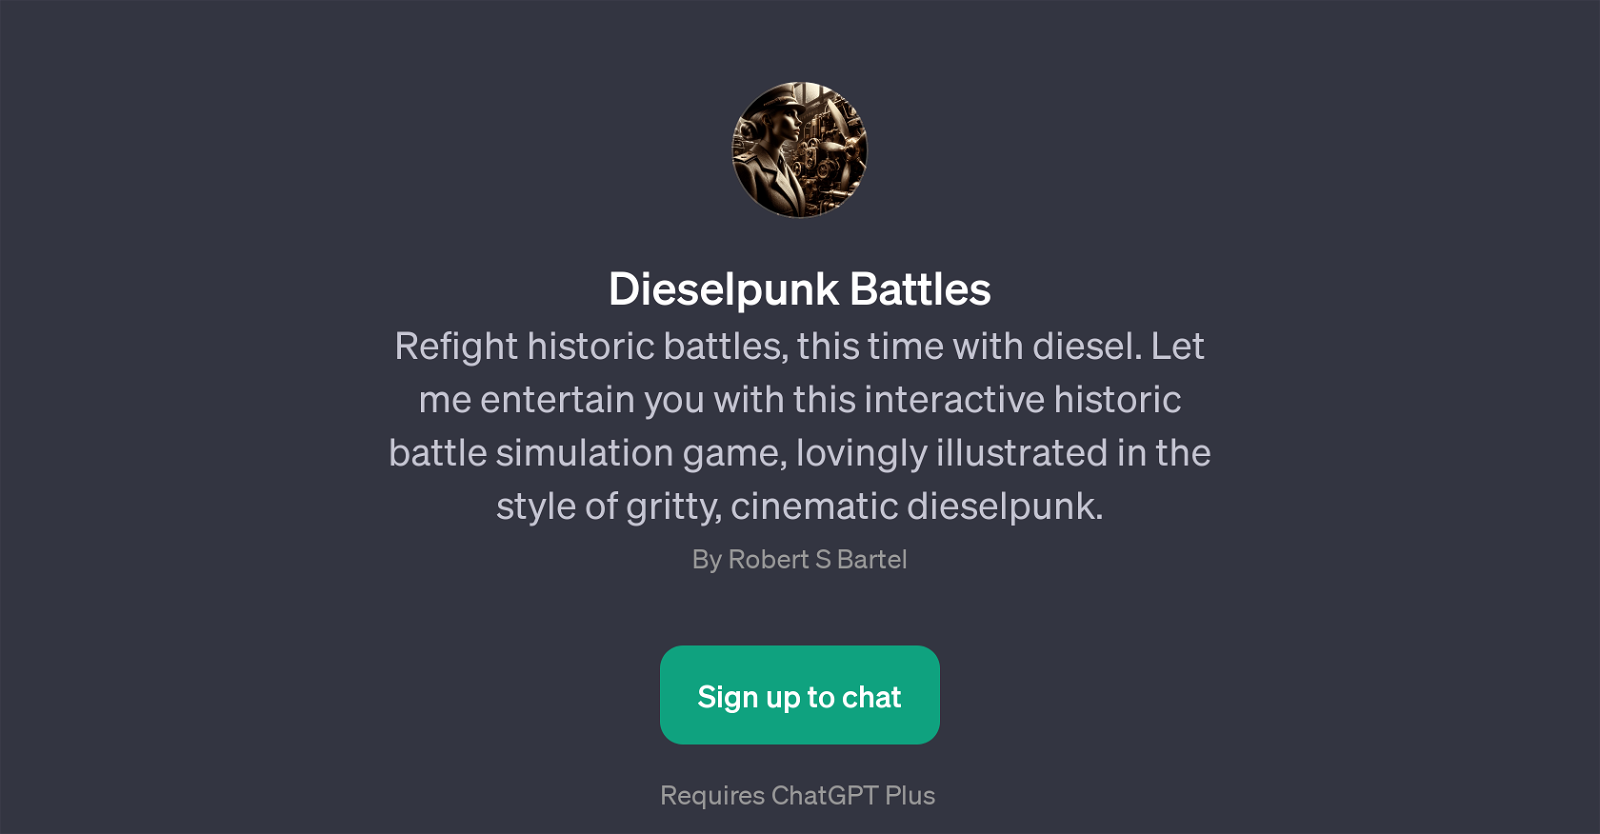 Dieselpunk Battles website